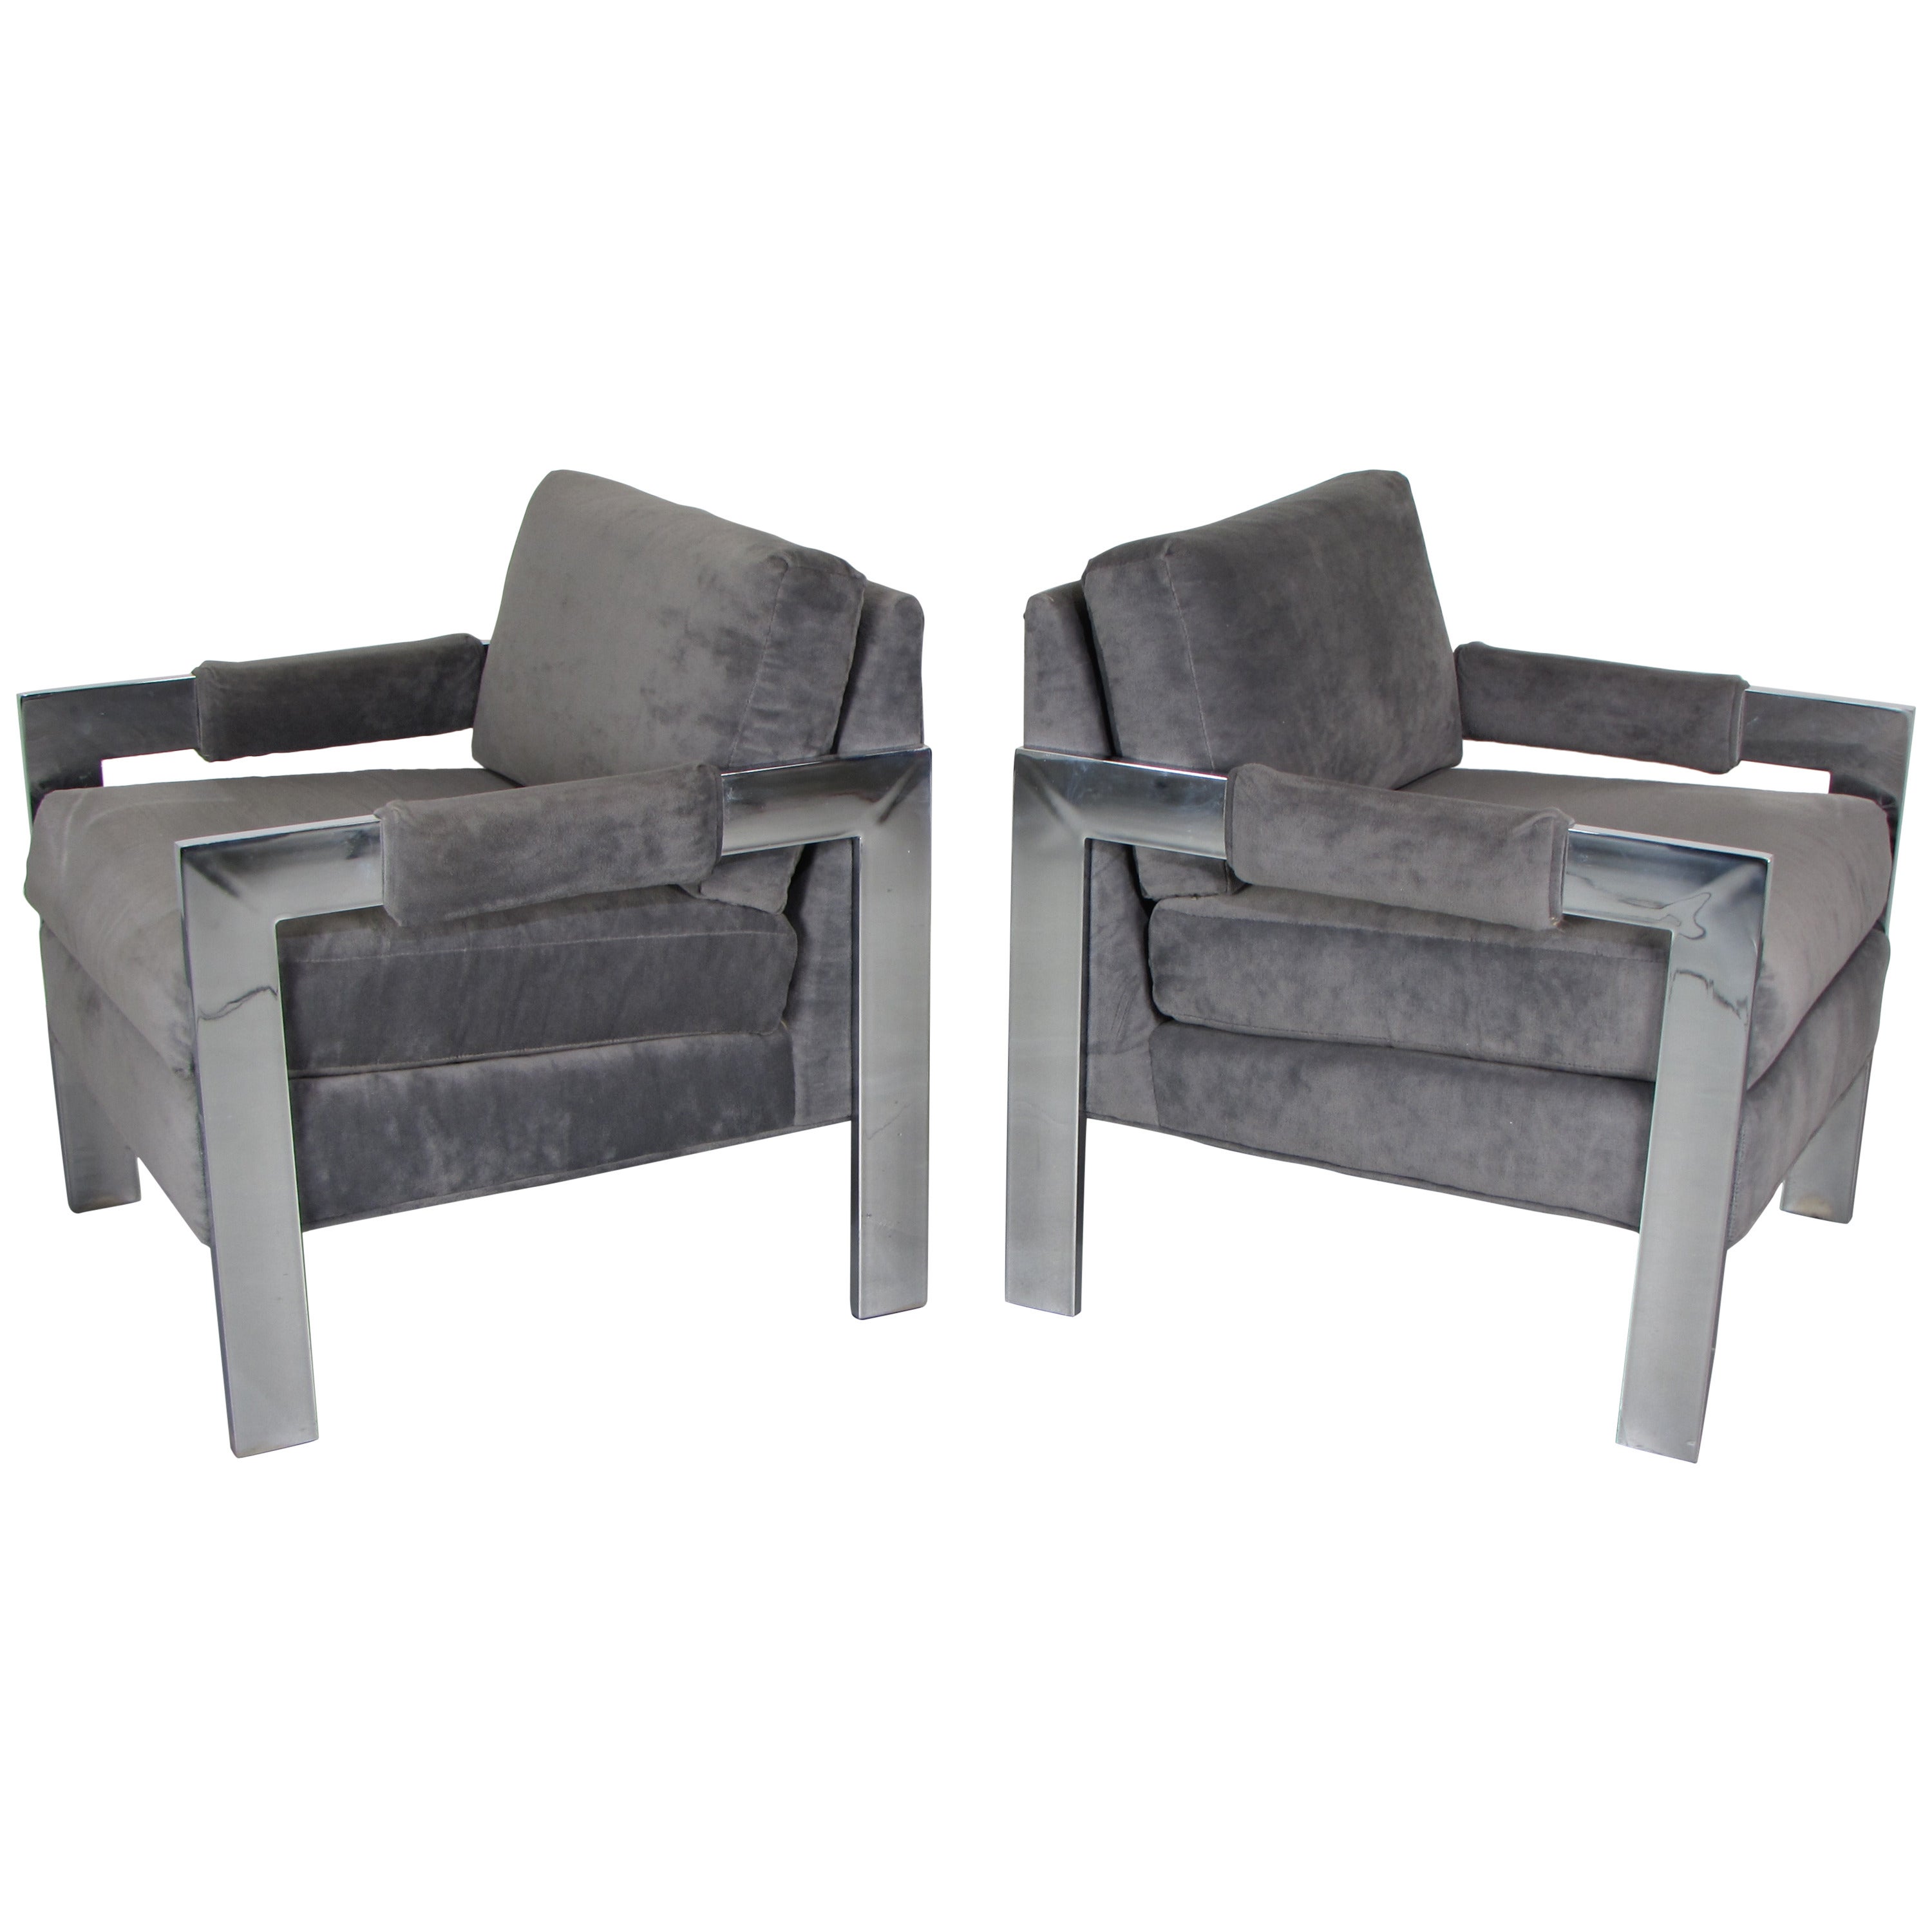 Pair of Glamorous Chunky Chrome 1970s Lounge Chairs